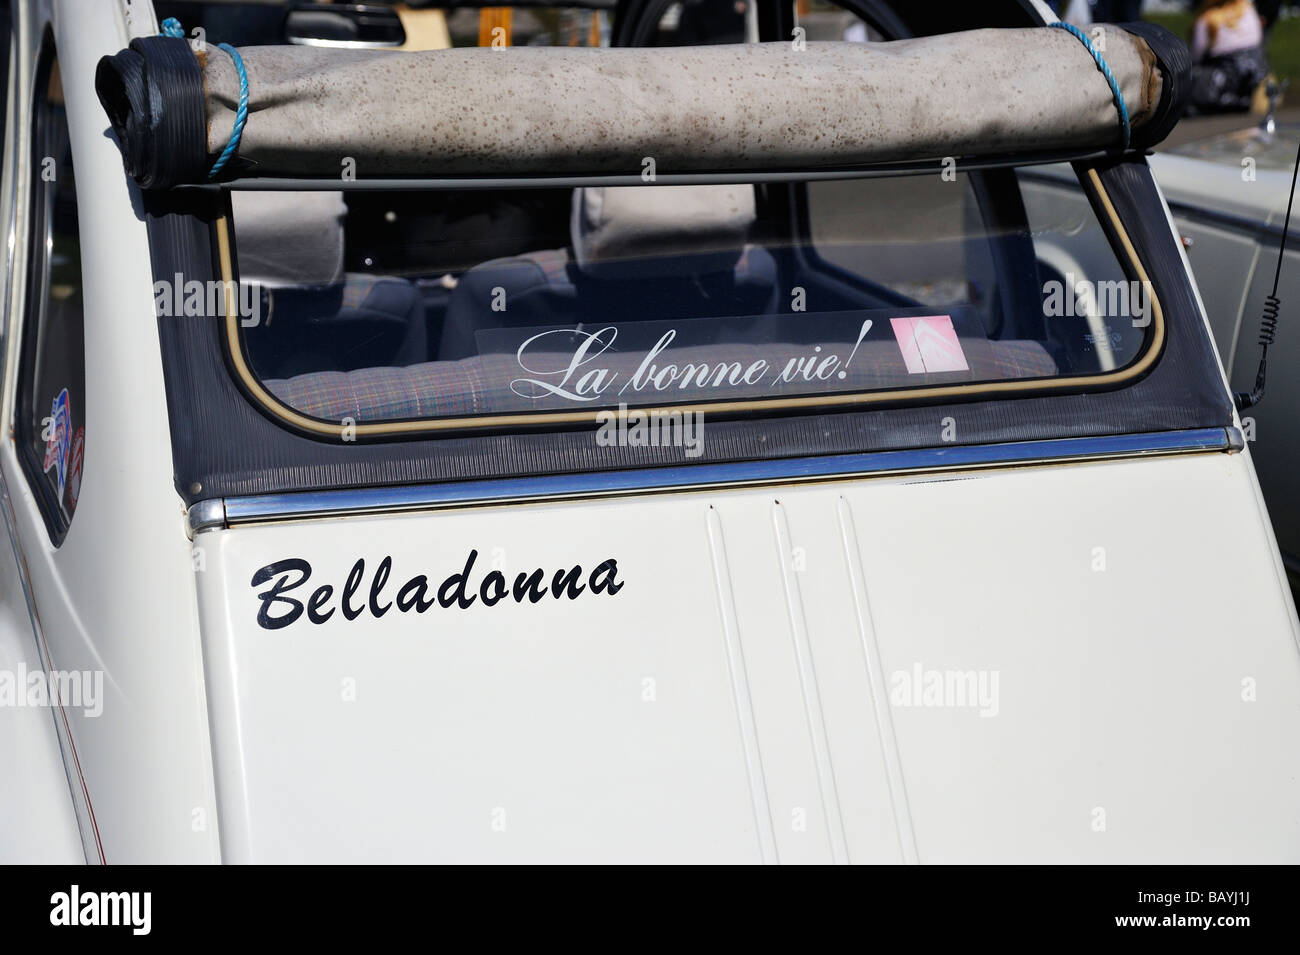 french-citroen-2cv-car-called-belladonna